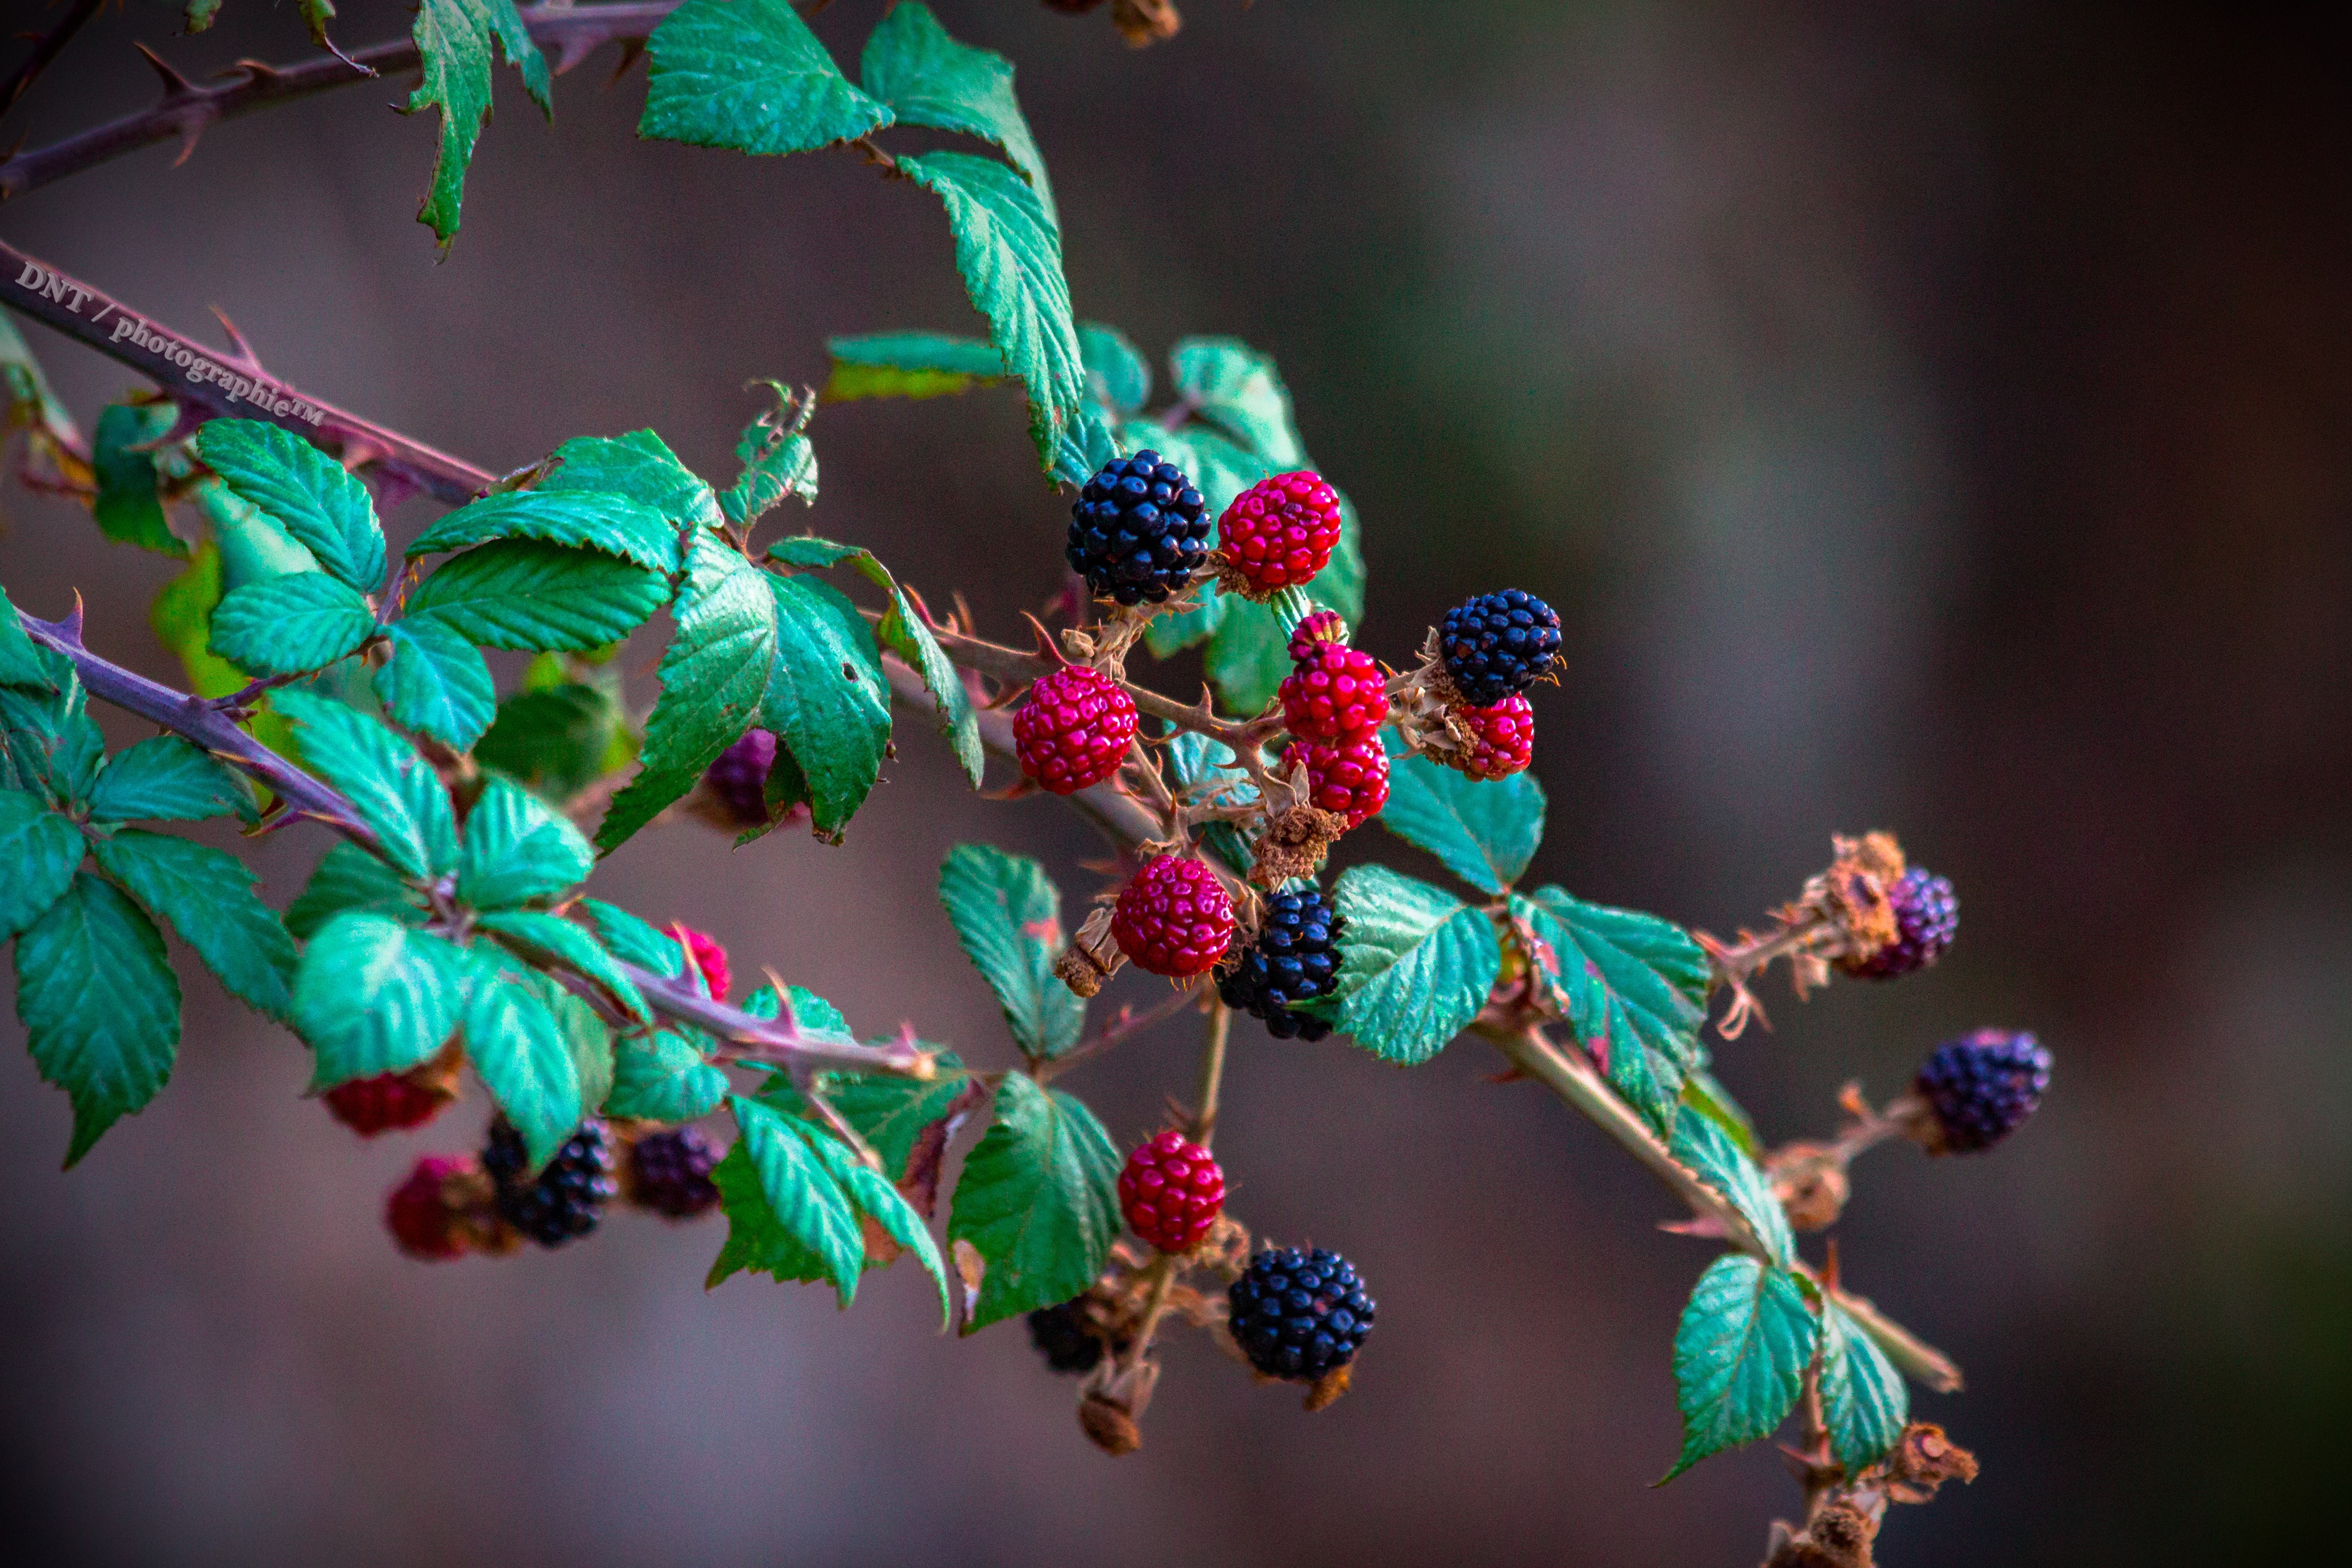 Phone Wallpaper (No watermarks) bush, branch, blackberry, berry